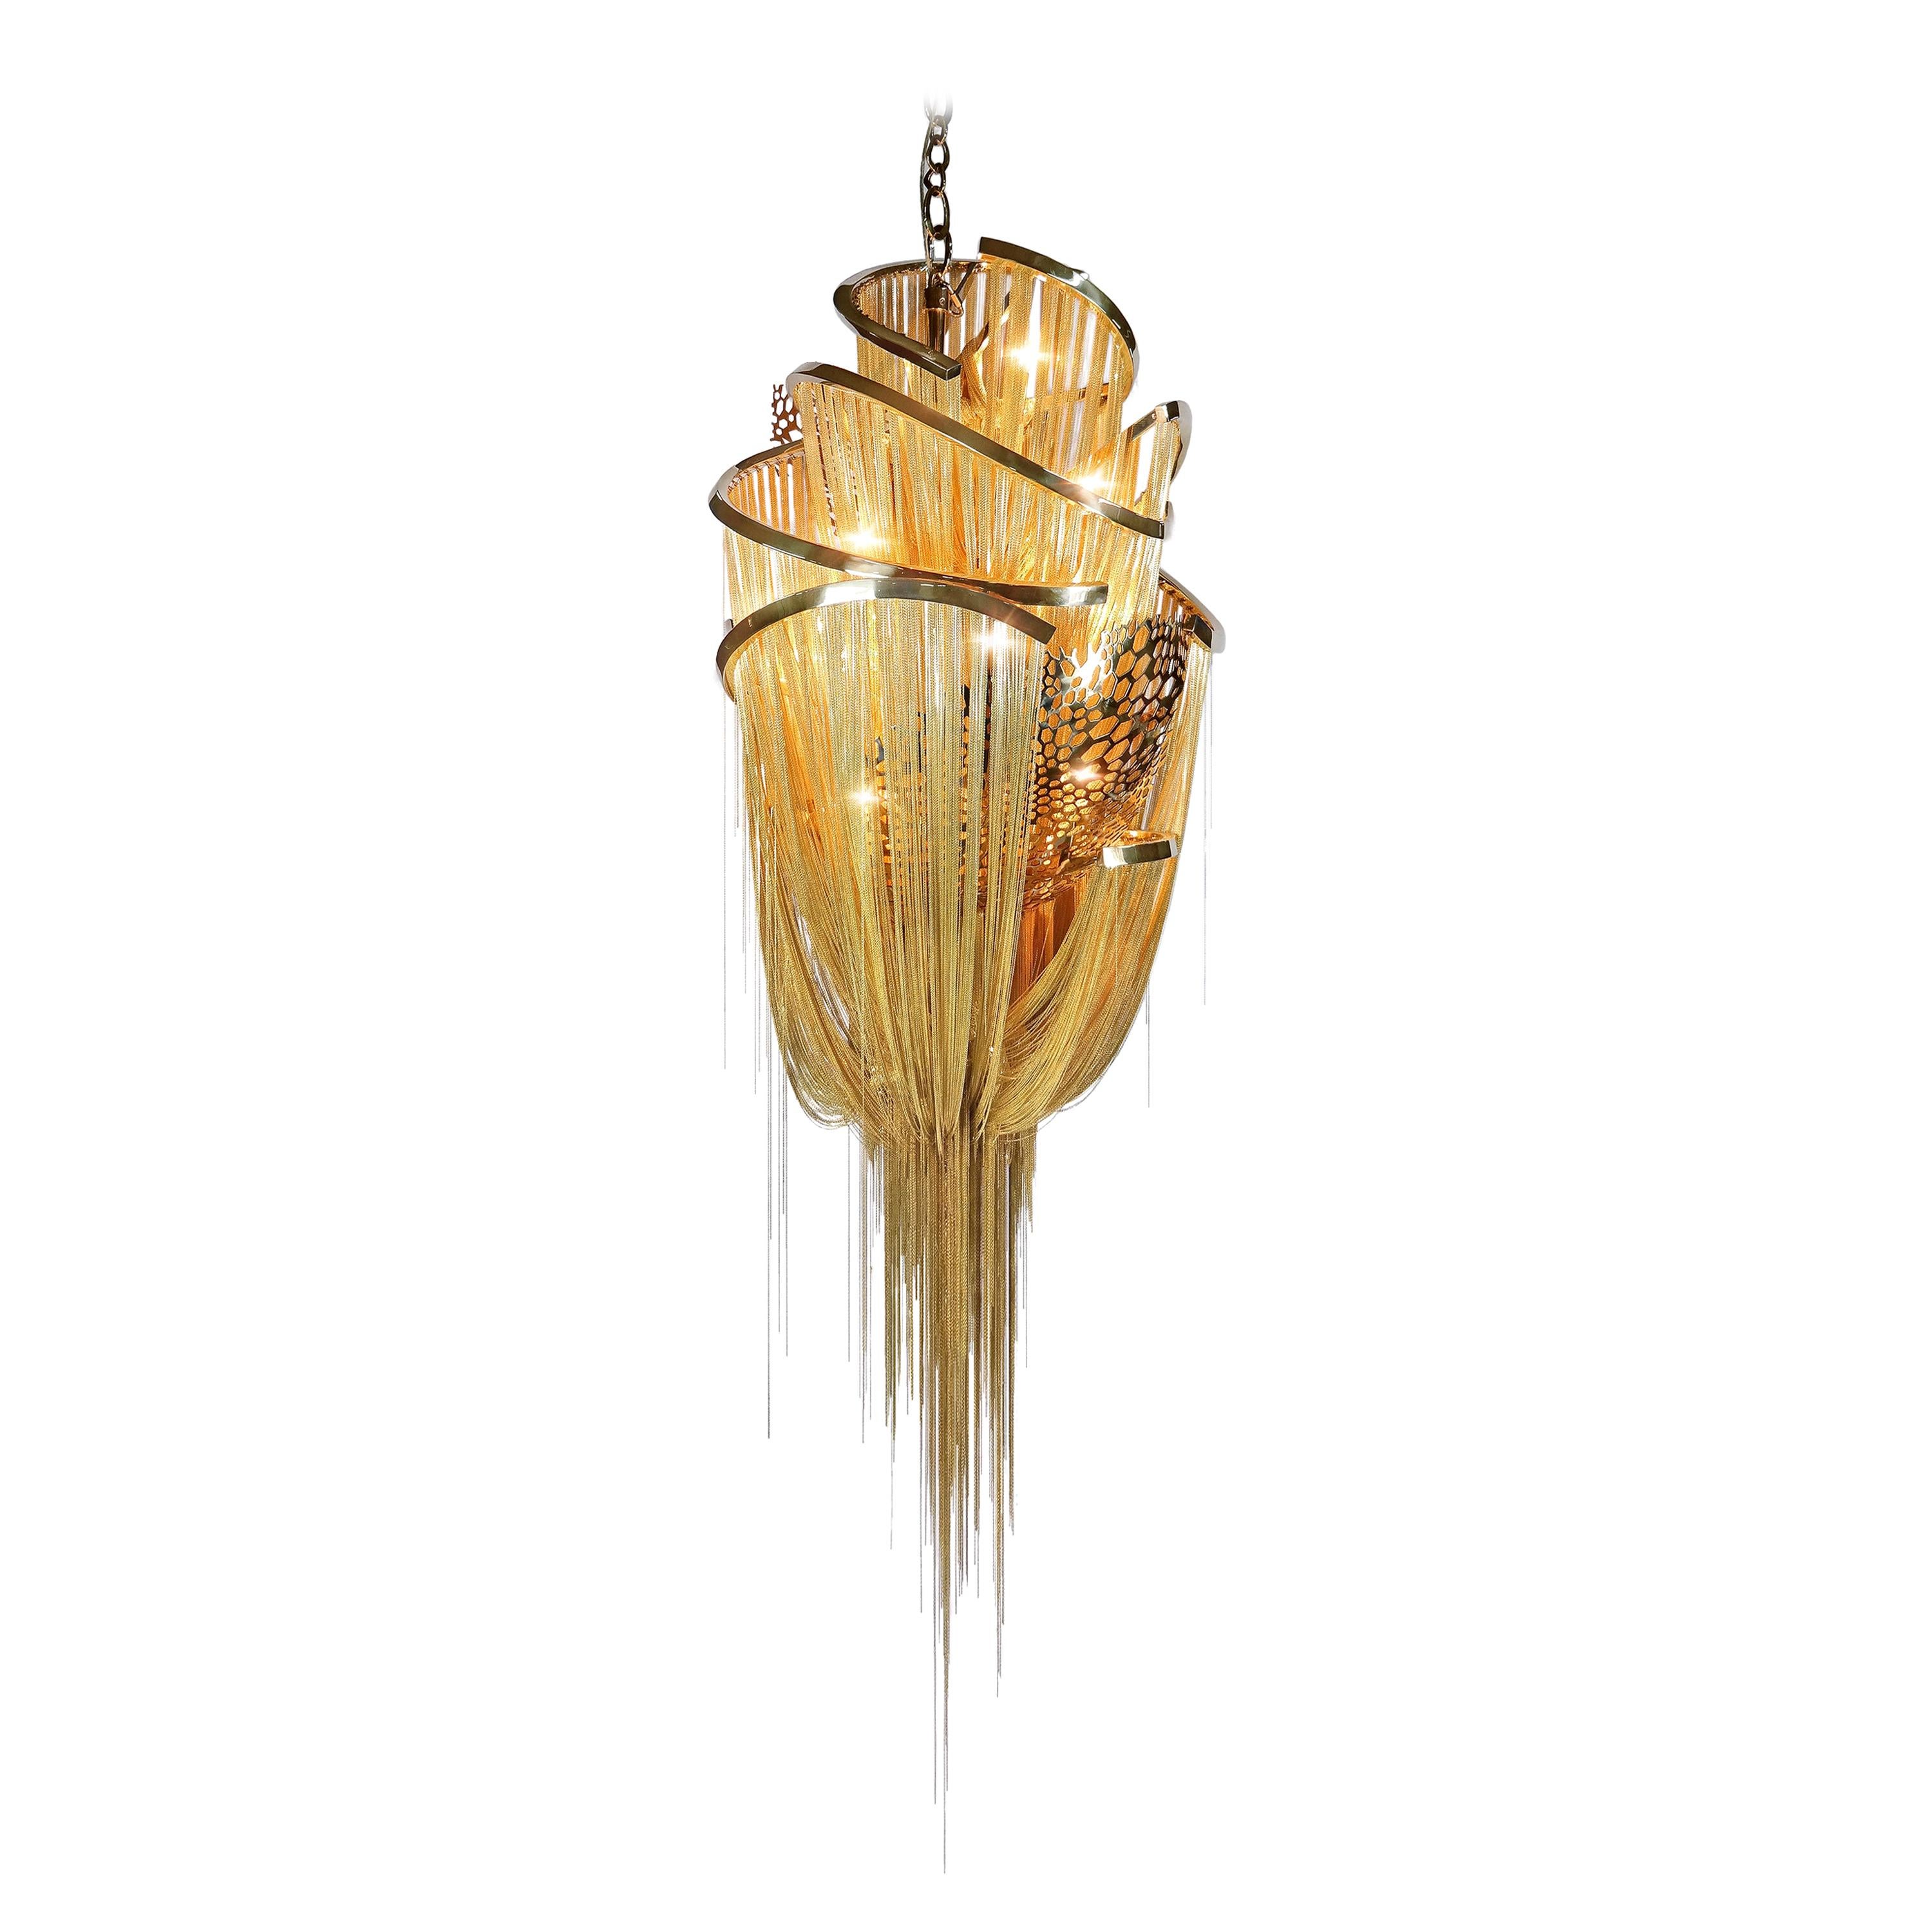 Lotus Chandelier:  Elegant, Draped Chandelier in Bronze or Stainless Steel